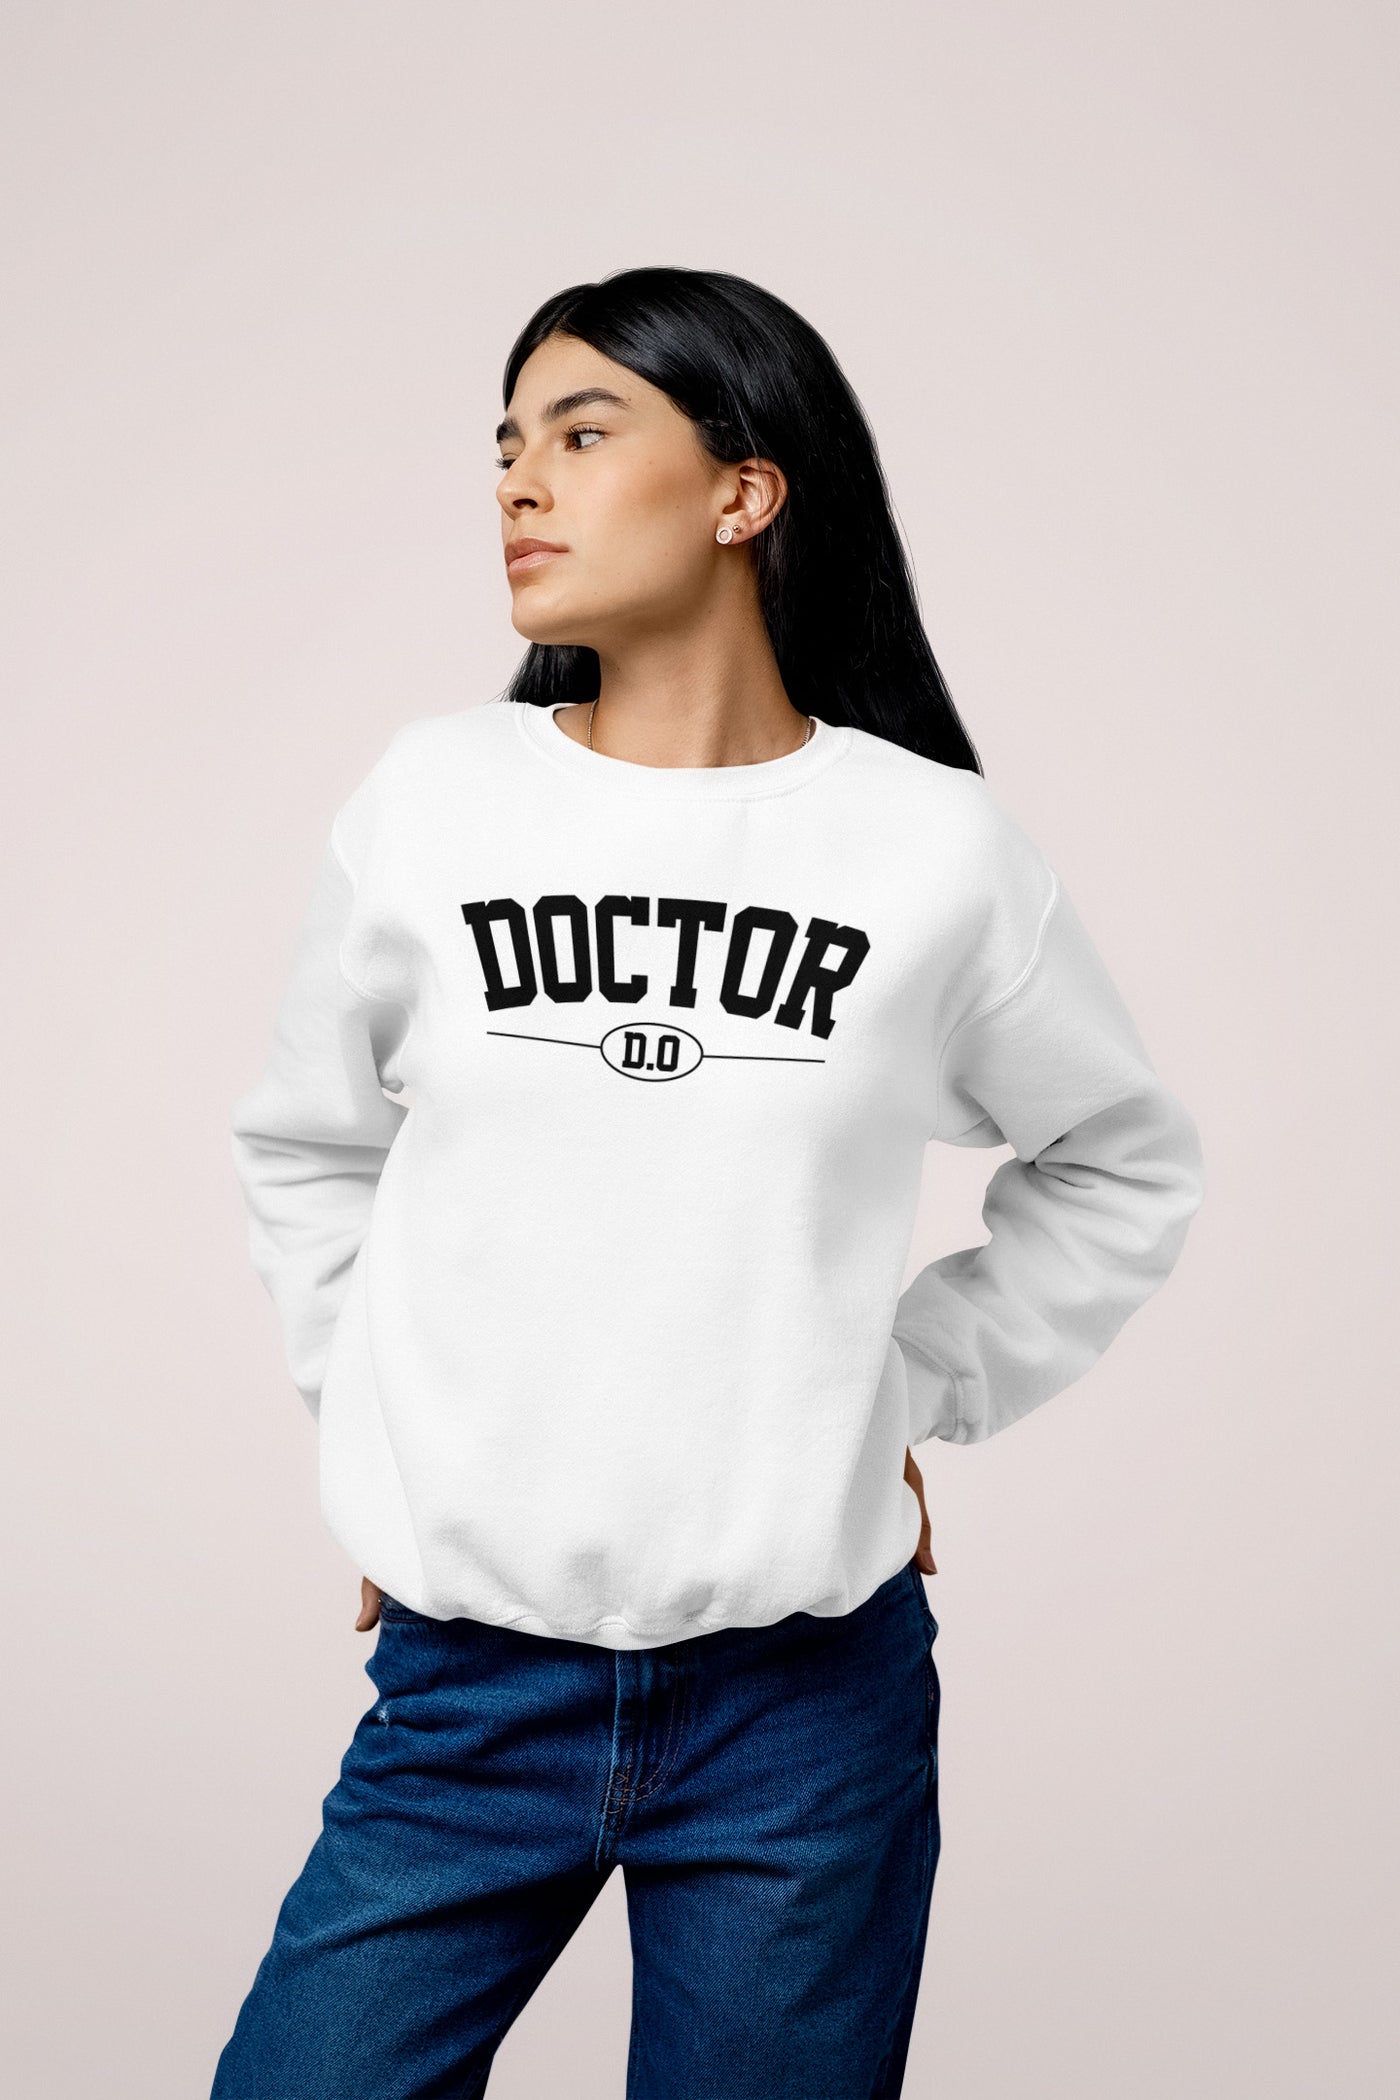 Doctor "D.O" Crewneck Sweatshirt